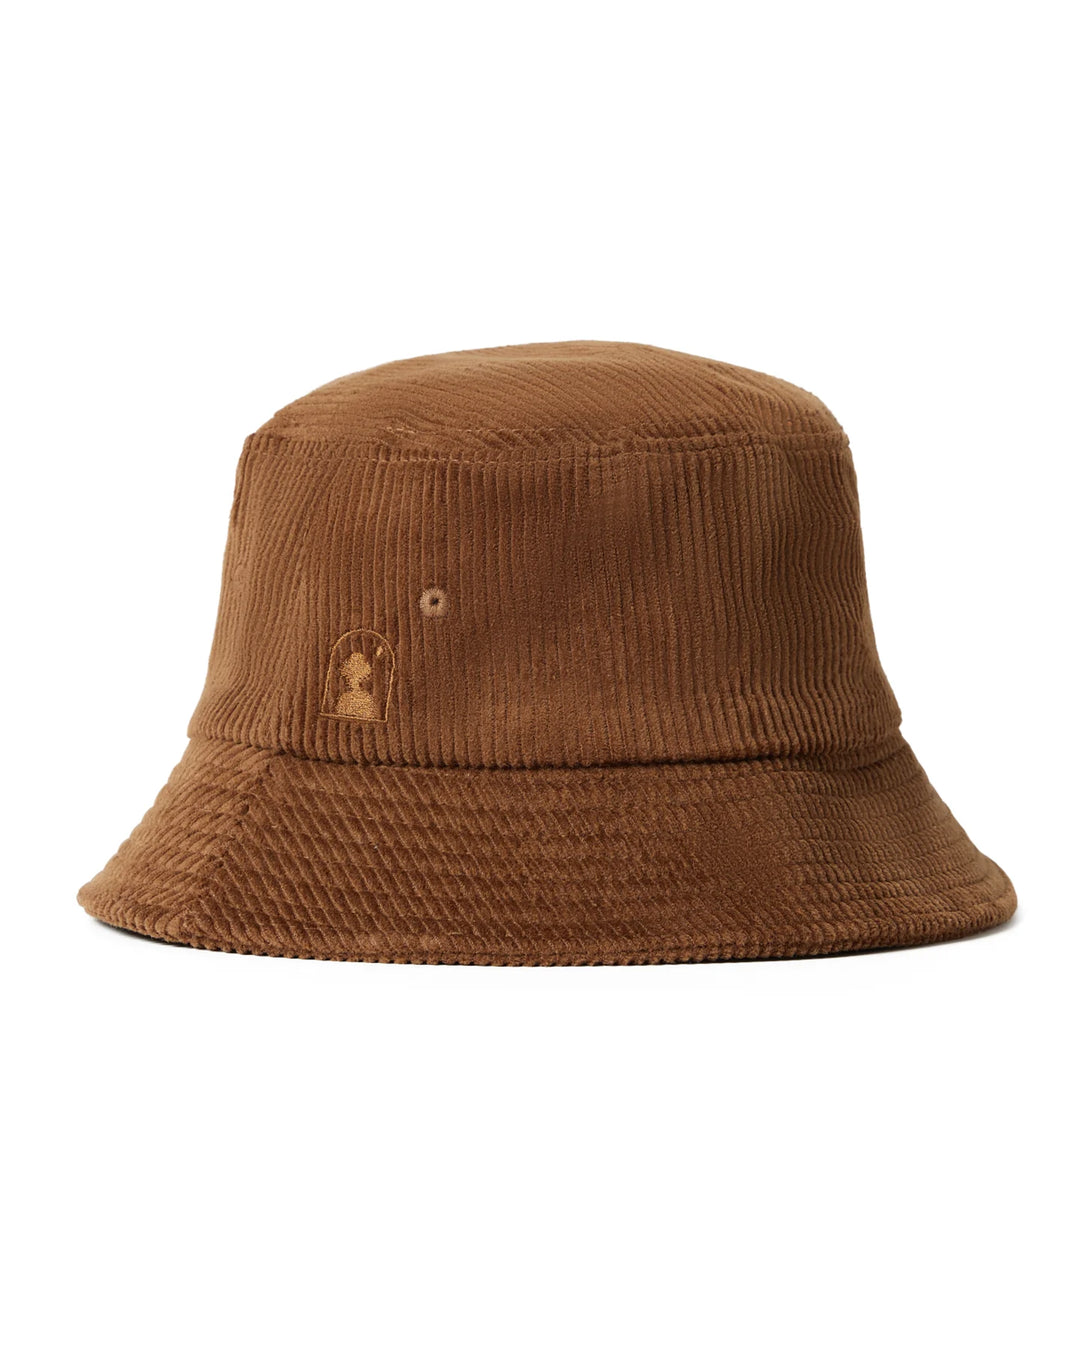 dandy del brown hat